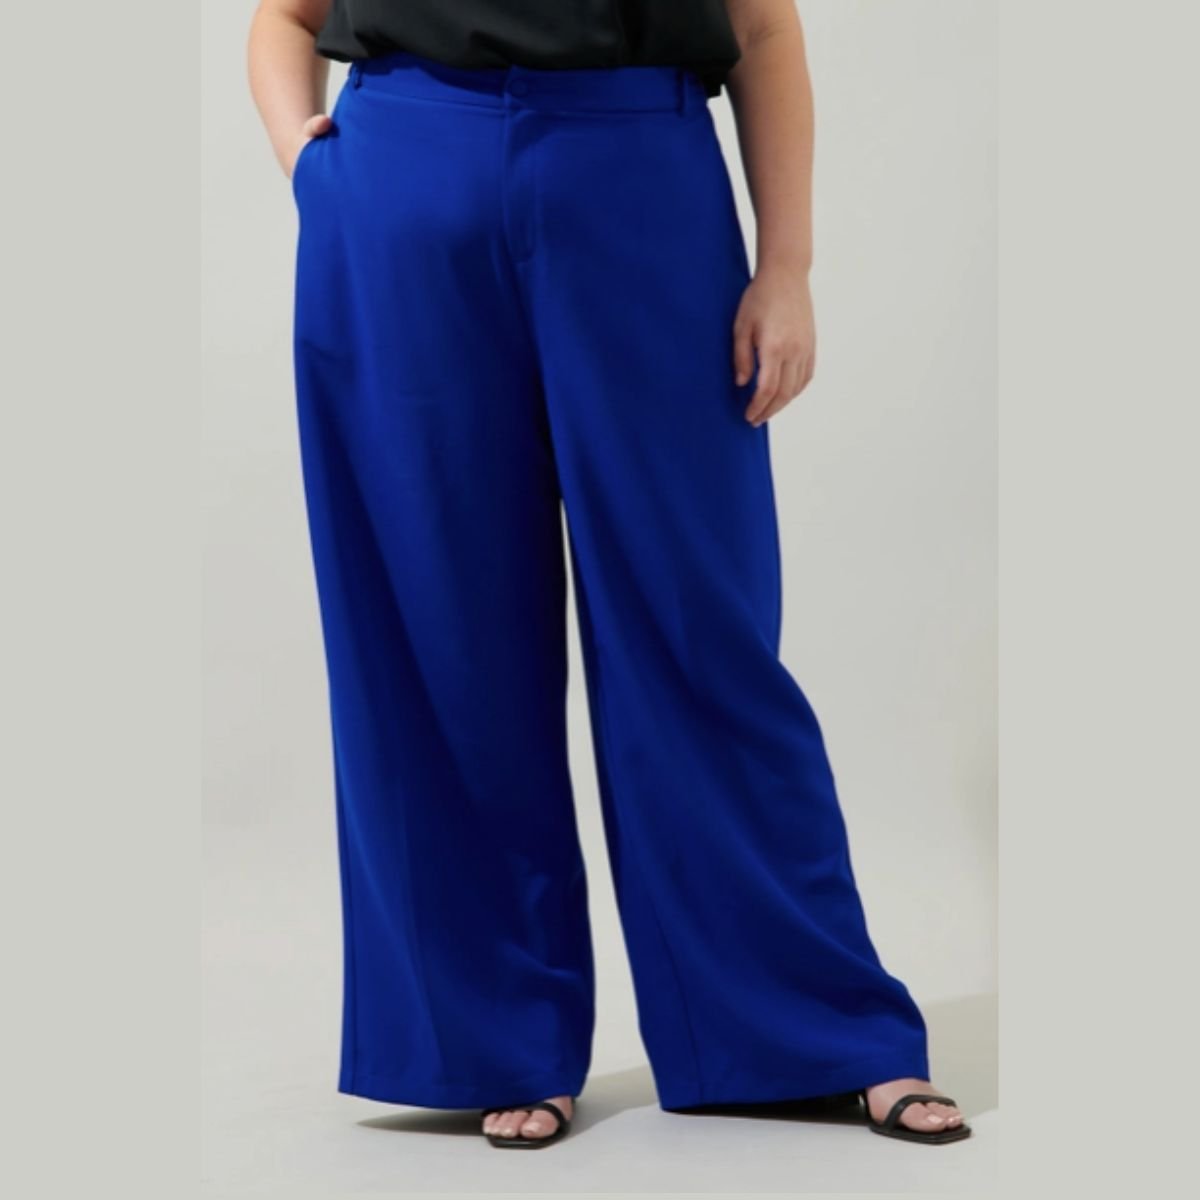 Wide Leg Pants - Cobalt Blue - Sizes 3XL-XL - dom+bomb